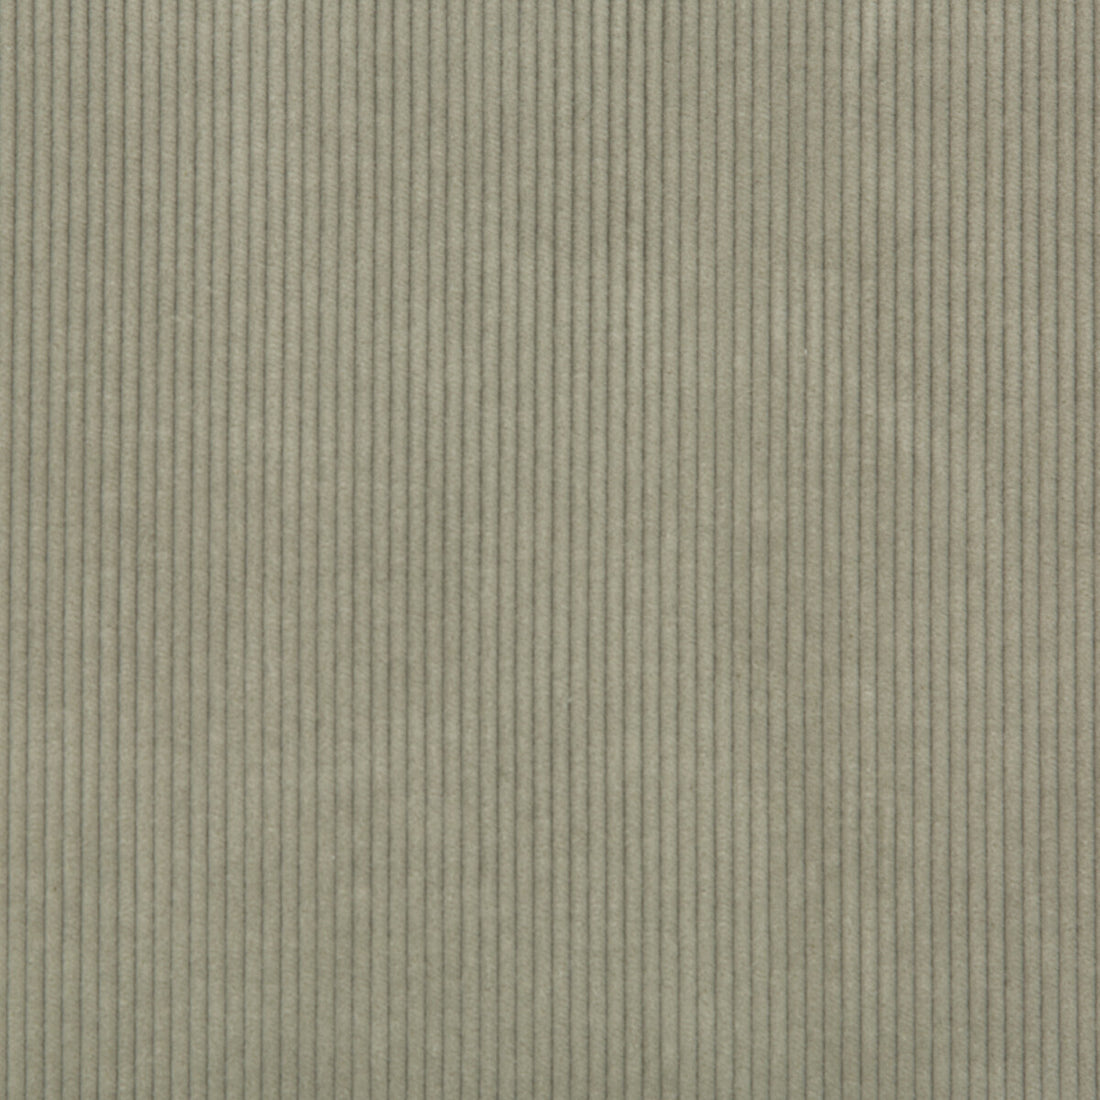 Saranac Cord fabric in celadon color - pattern 2017121.316.0 - by Lee Jofa